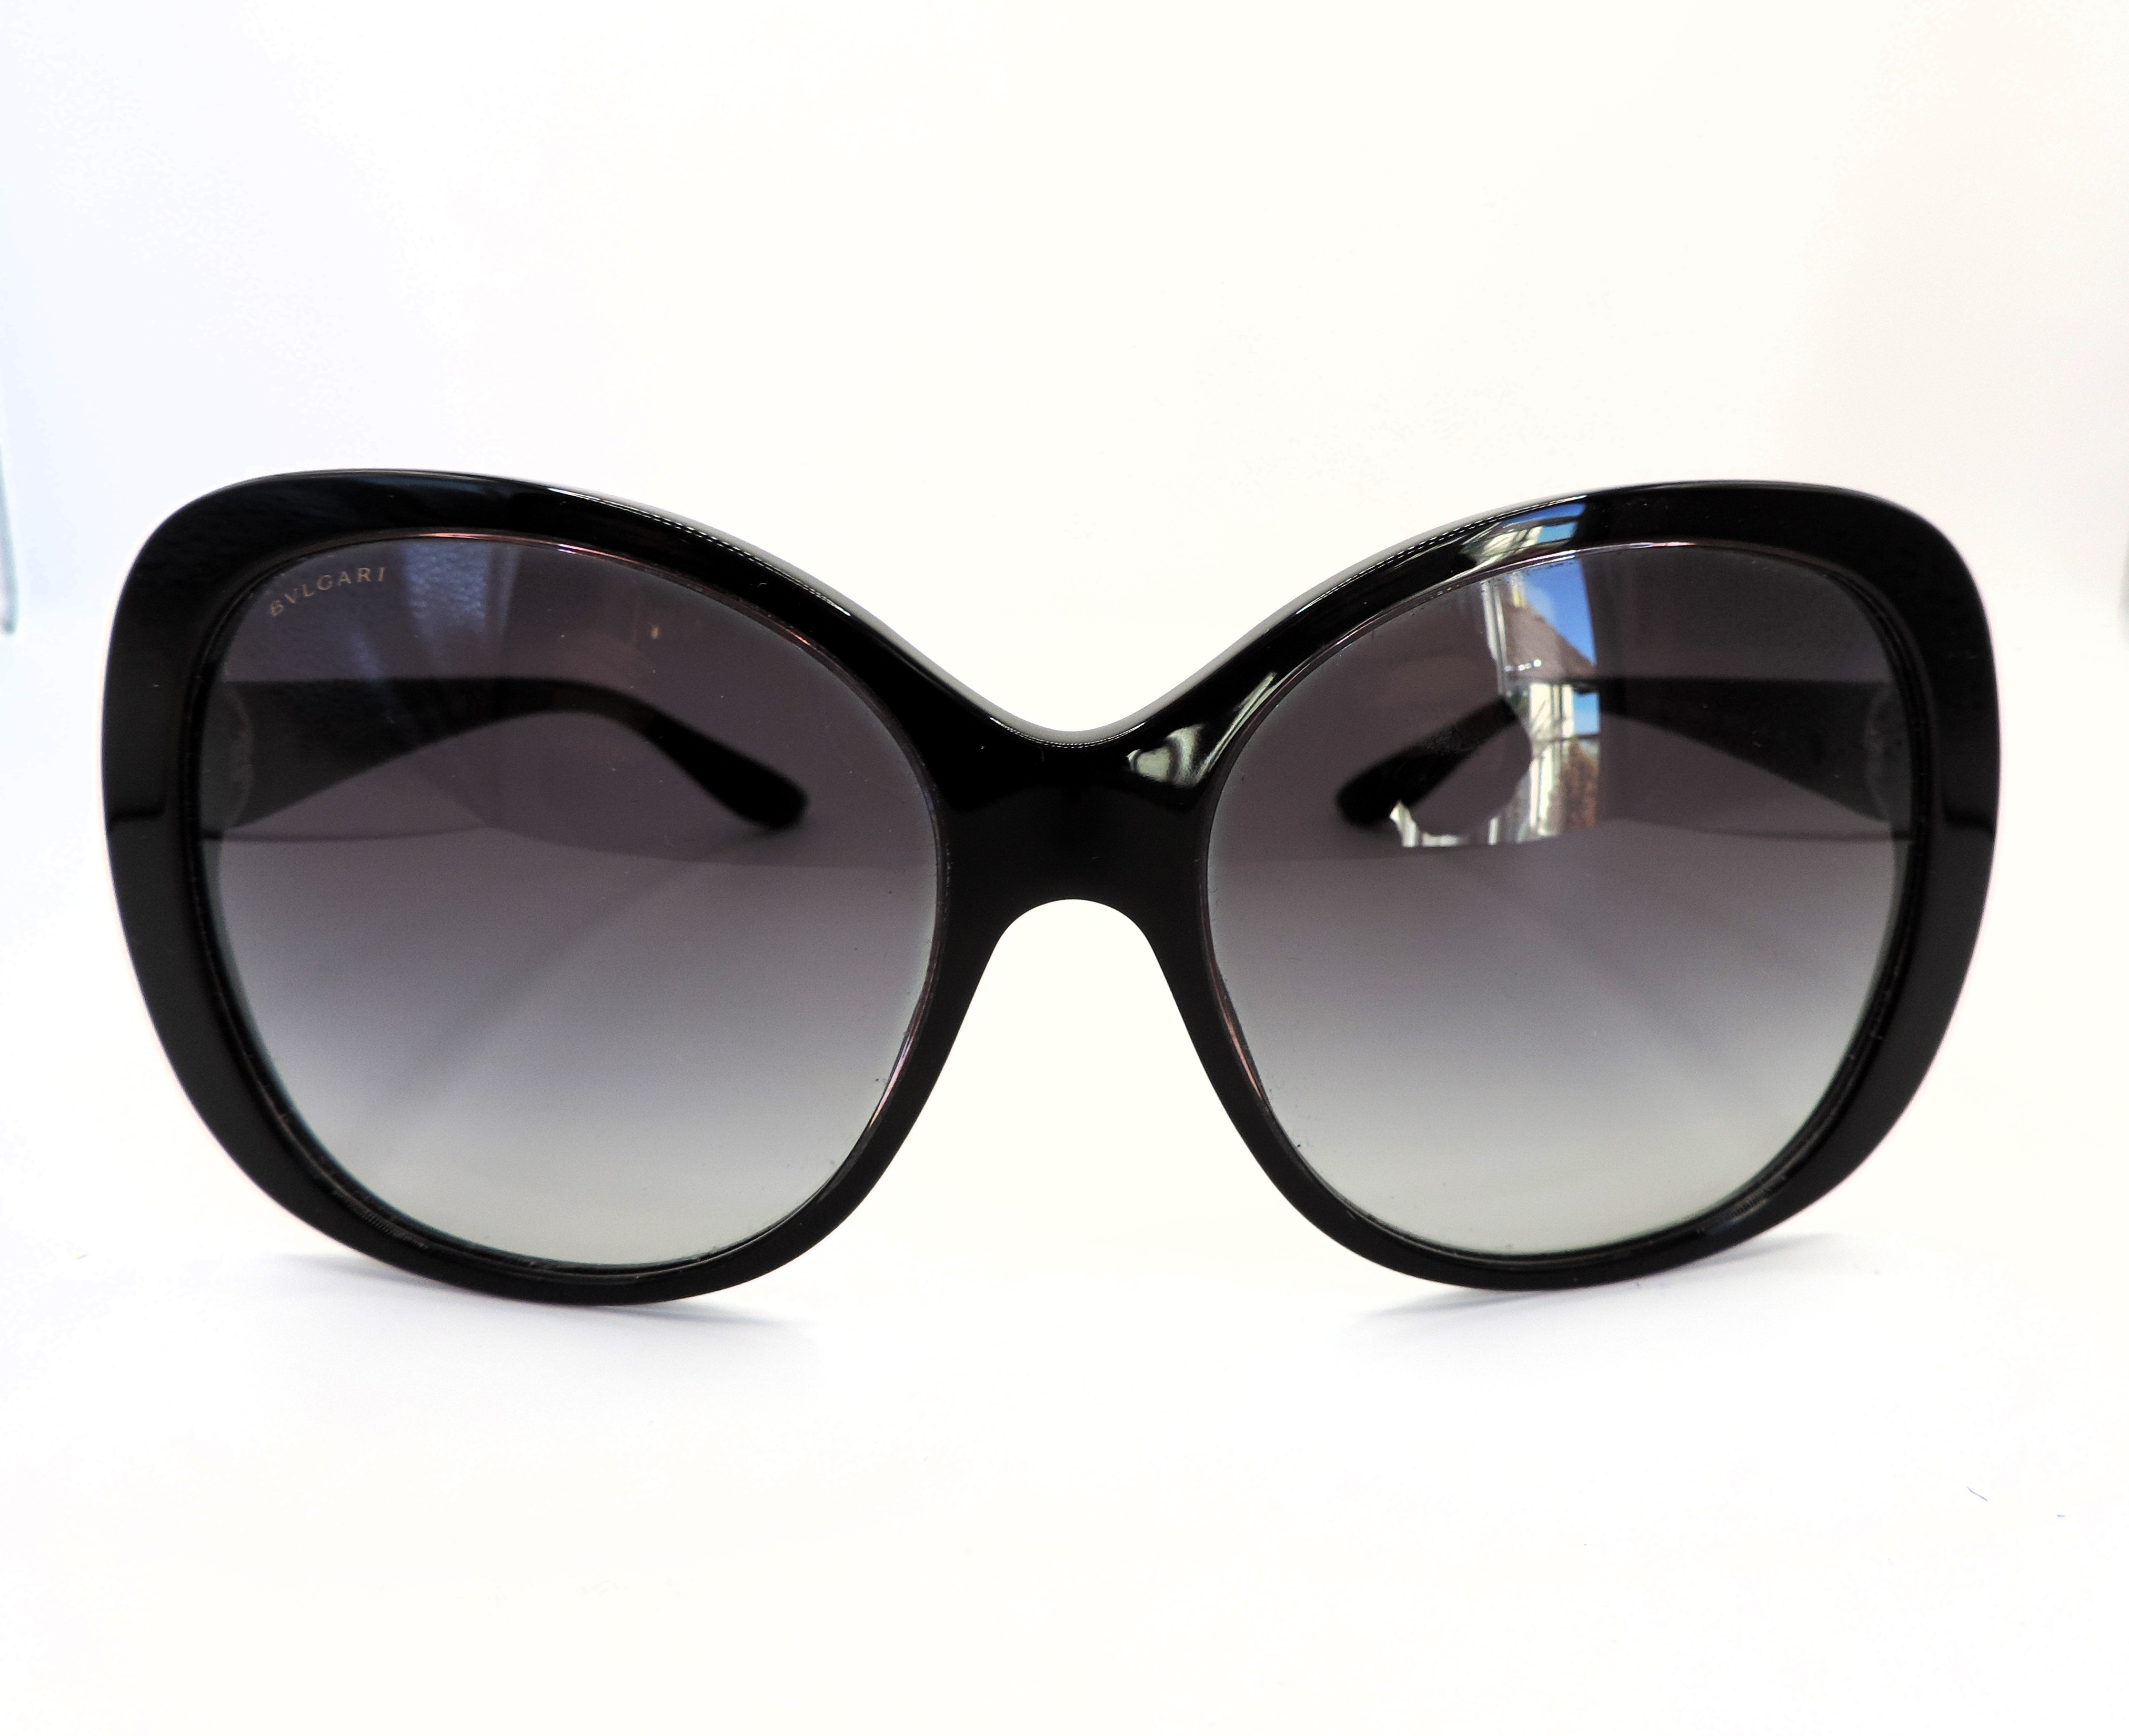 BVLGARI Black Sunglasses 8171-C Jewelled Hinged Detail New With Box & Certificate - Image 8 of 17